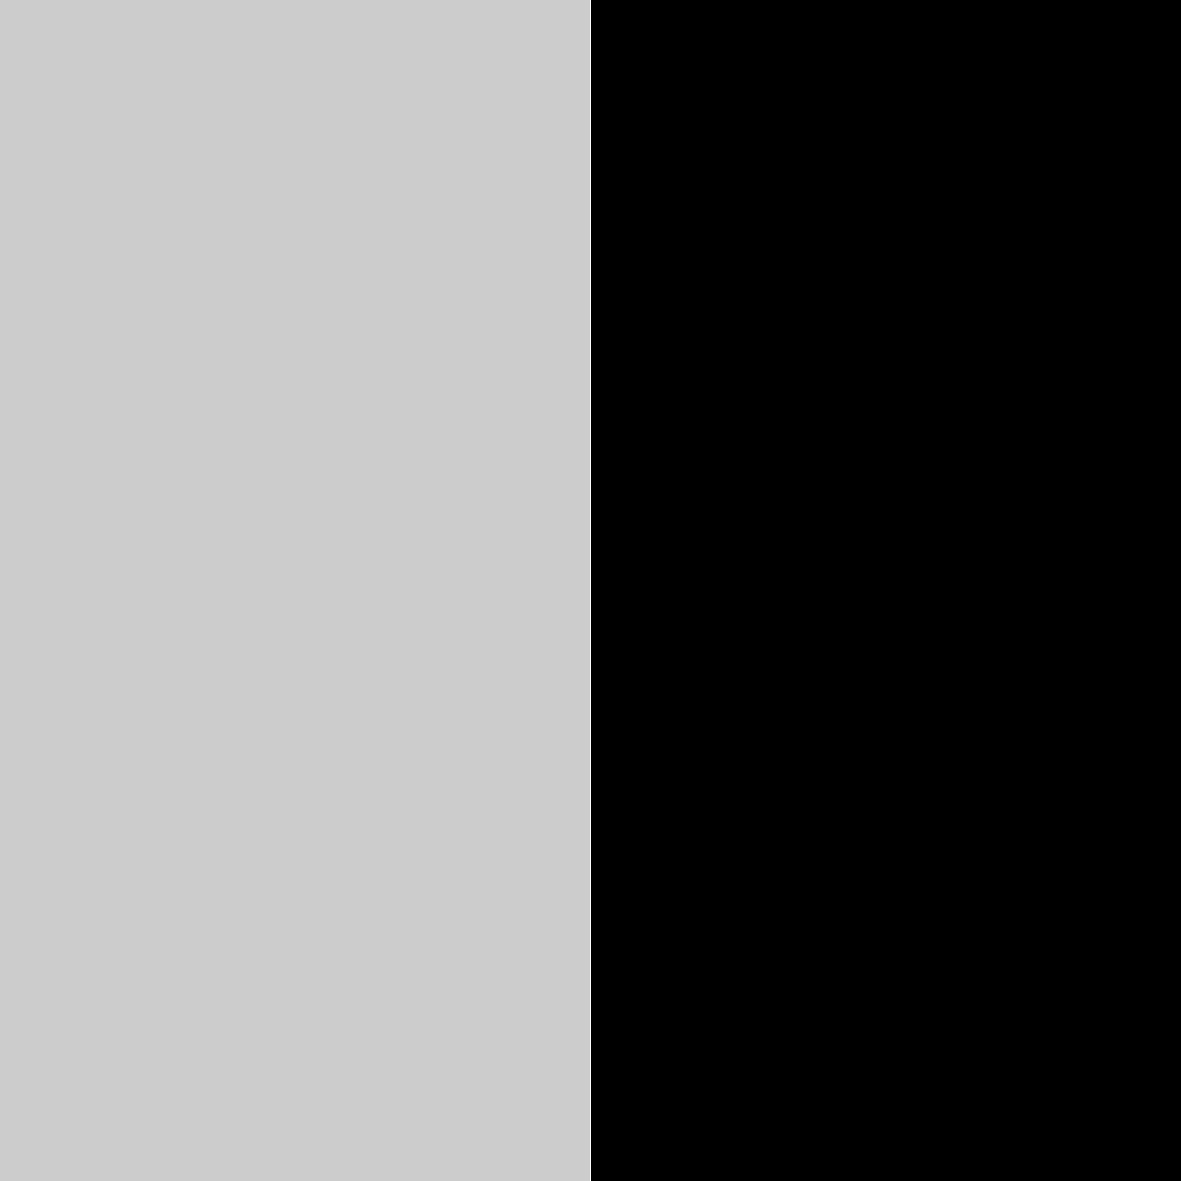 серый-меланж/черный_CCCCCC/000000